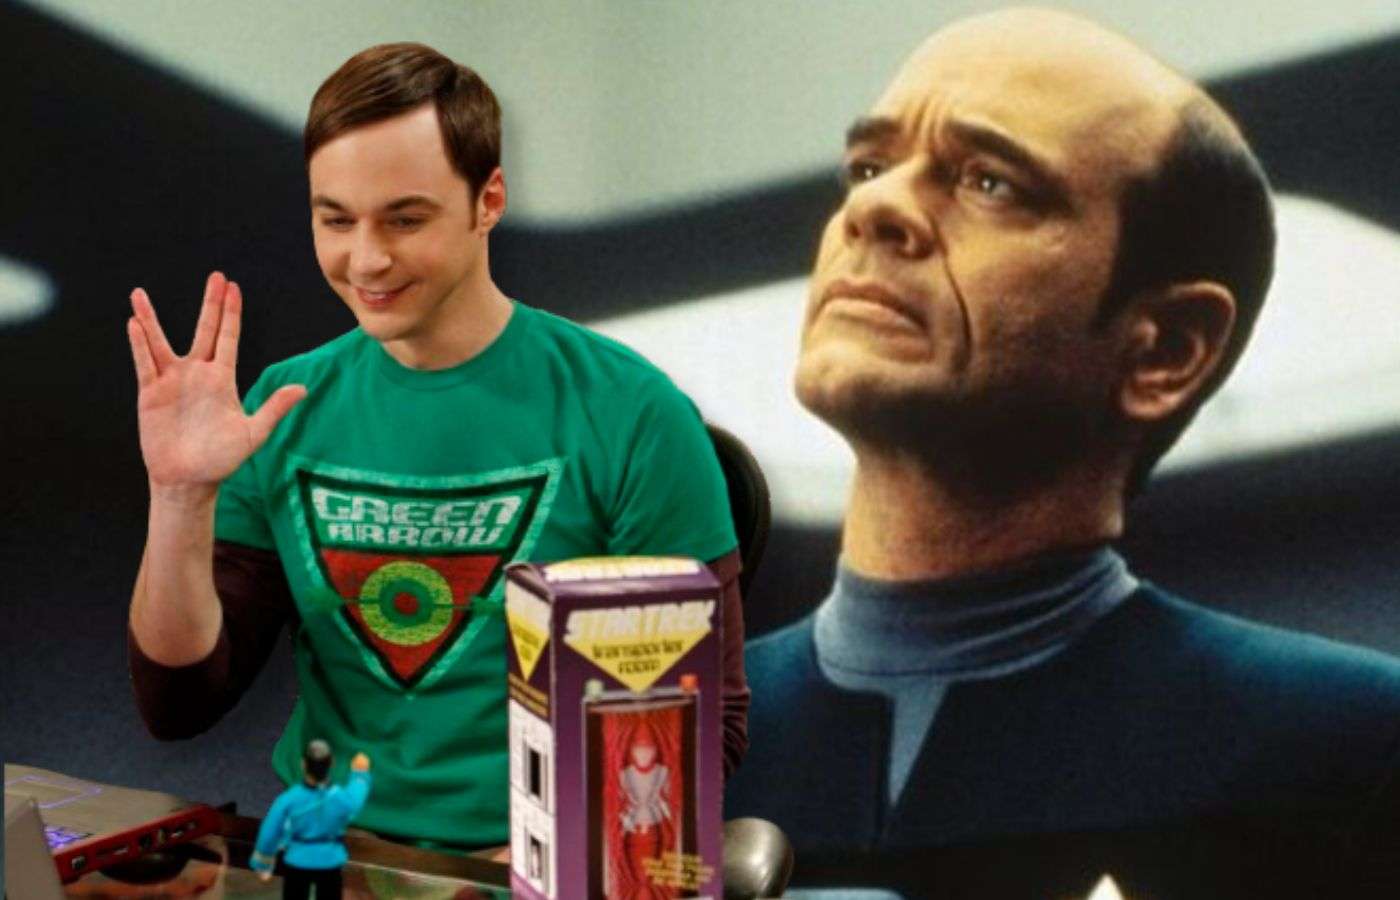 Sheldon Cooper in The Big Bang Theory and Robert Picardo in Star Trek: Voyager